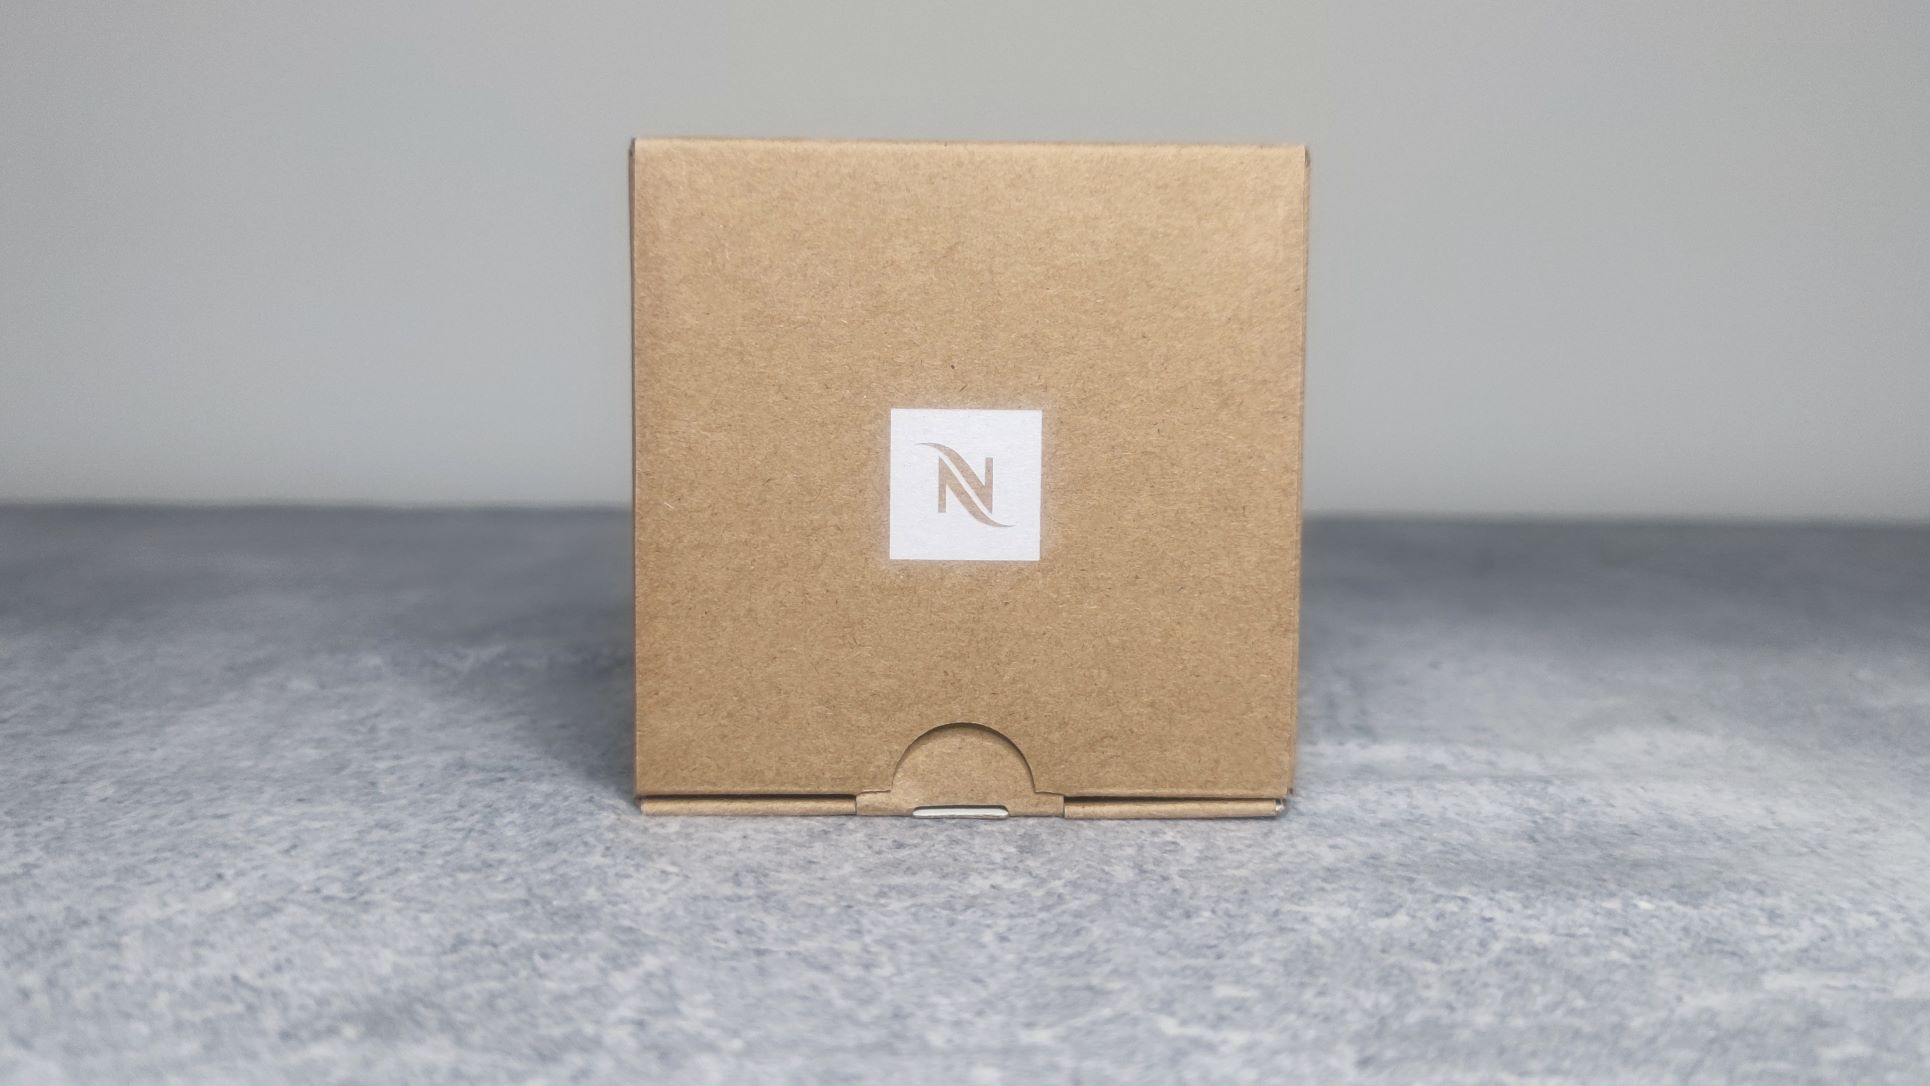 Nespresso Origin Collection - Set of 2 Coffee Mugs - New In Original  Packaging